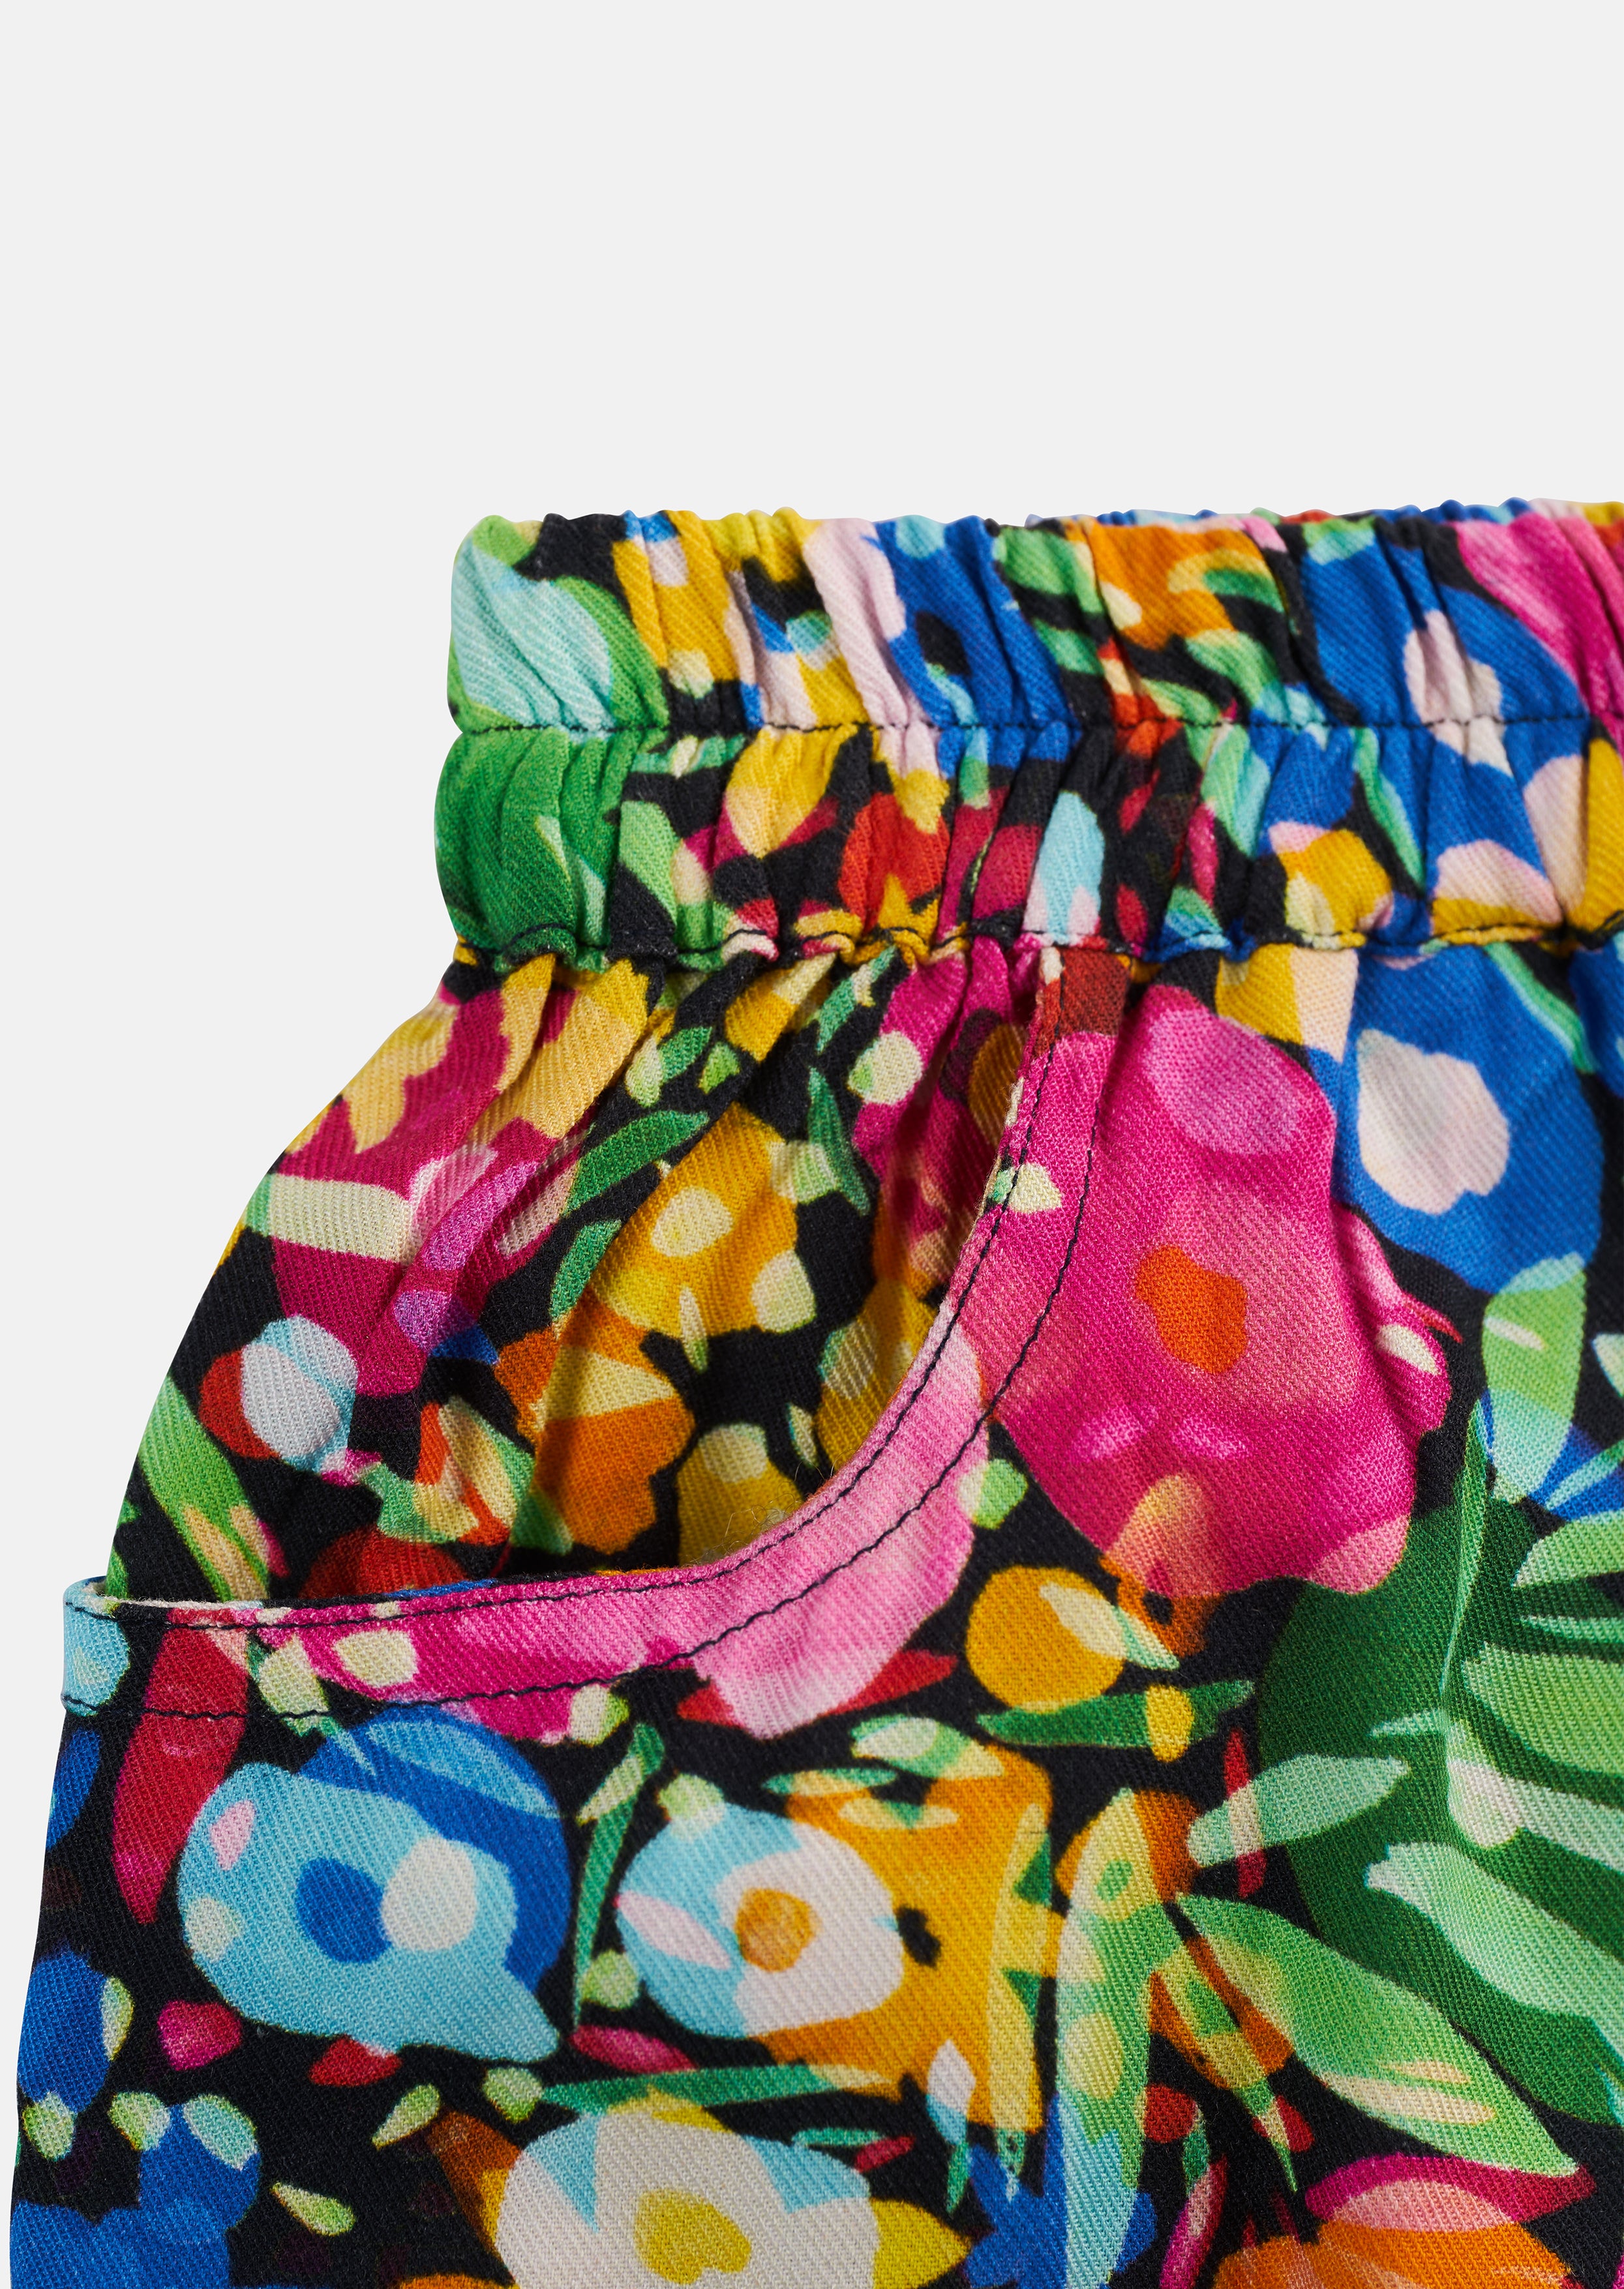 Girls Tropical Printed Woven Shorts